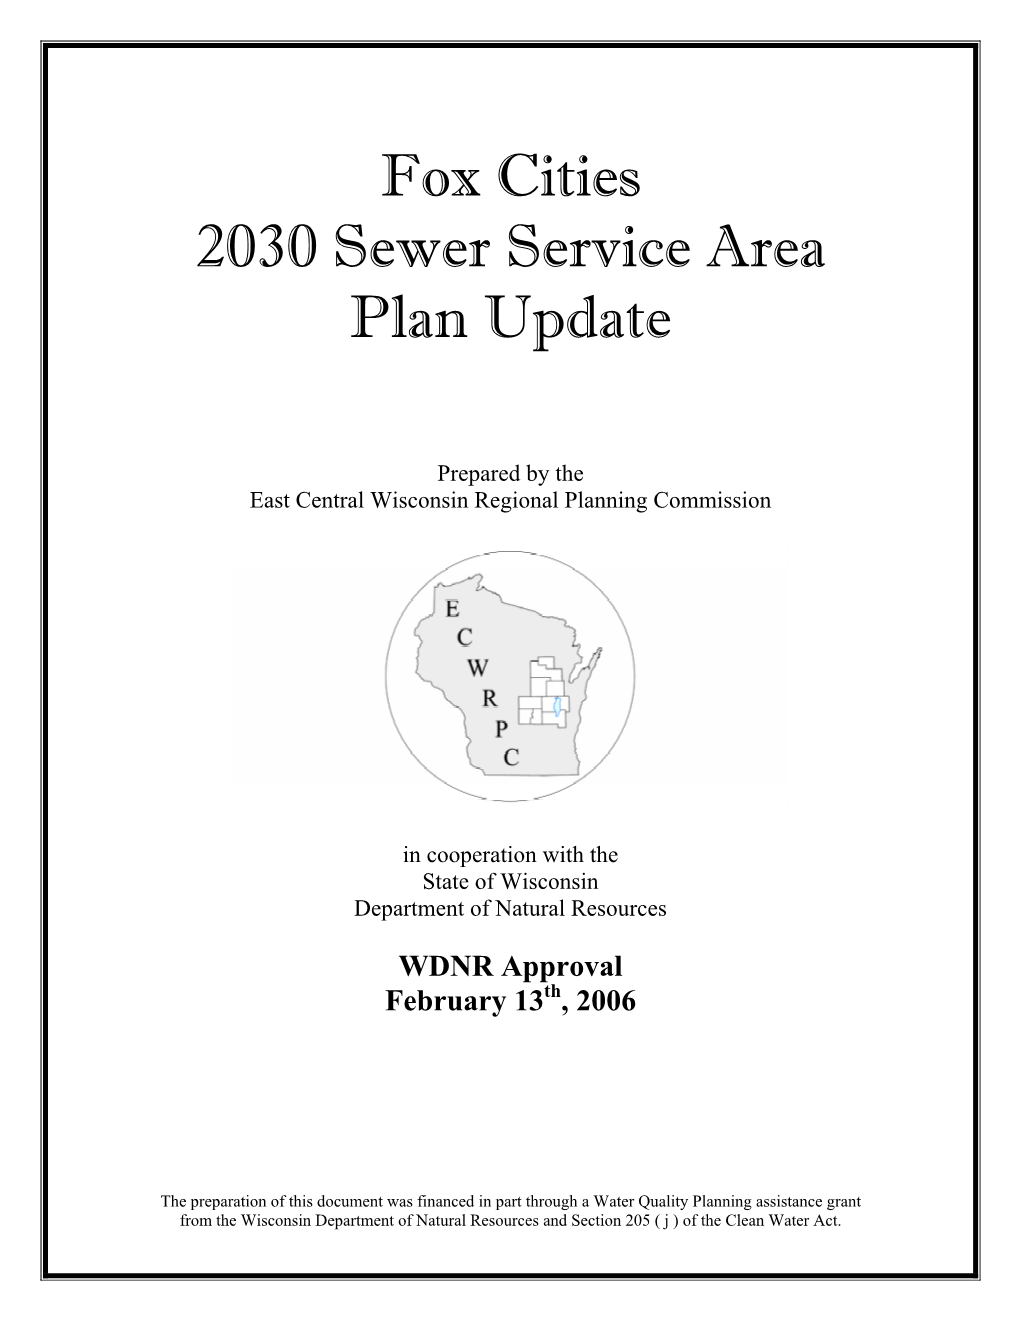 Fox Cities 2030 Sewer Service Area Plan Update